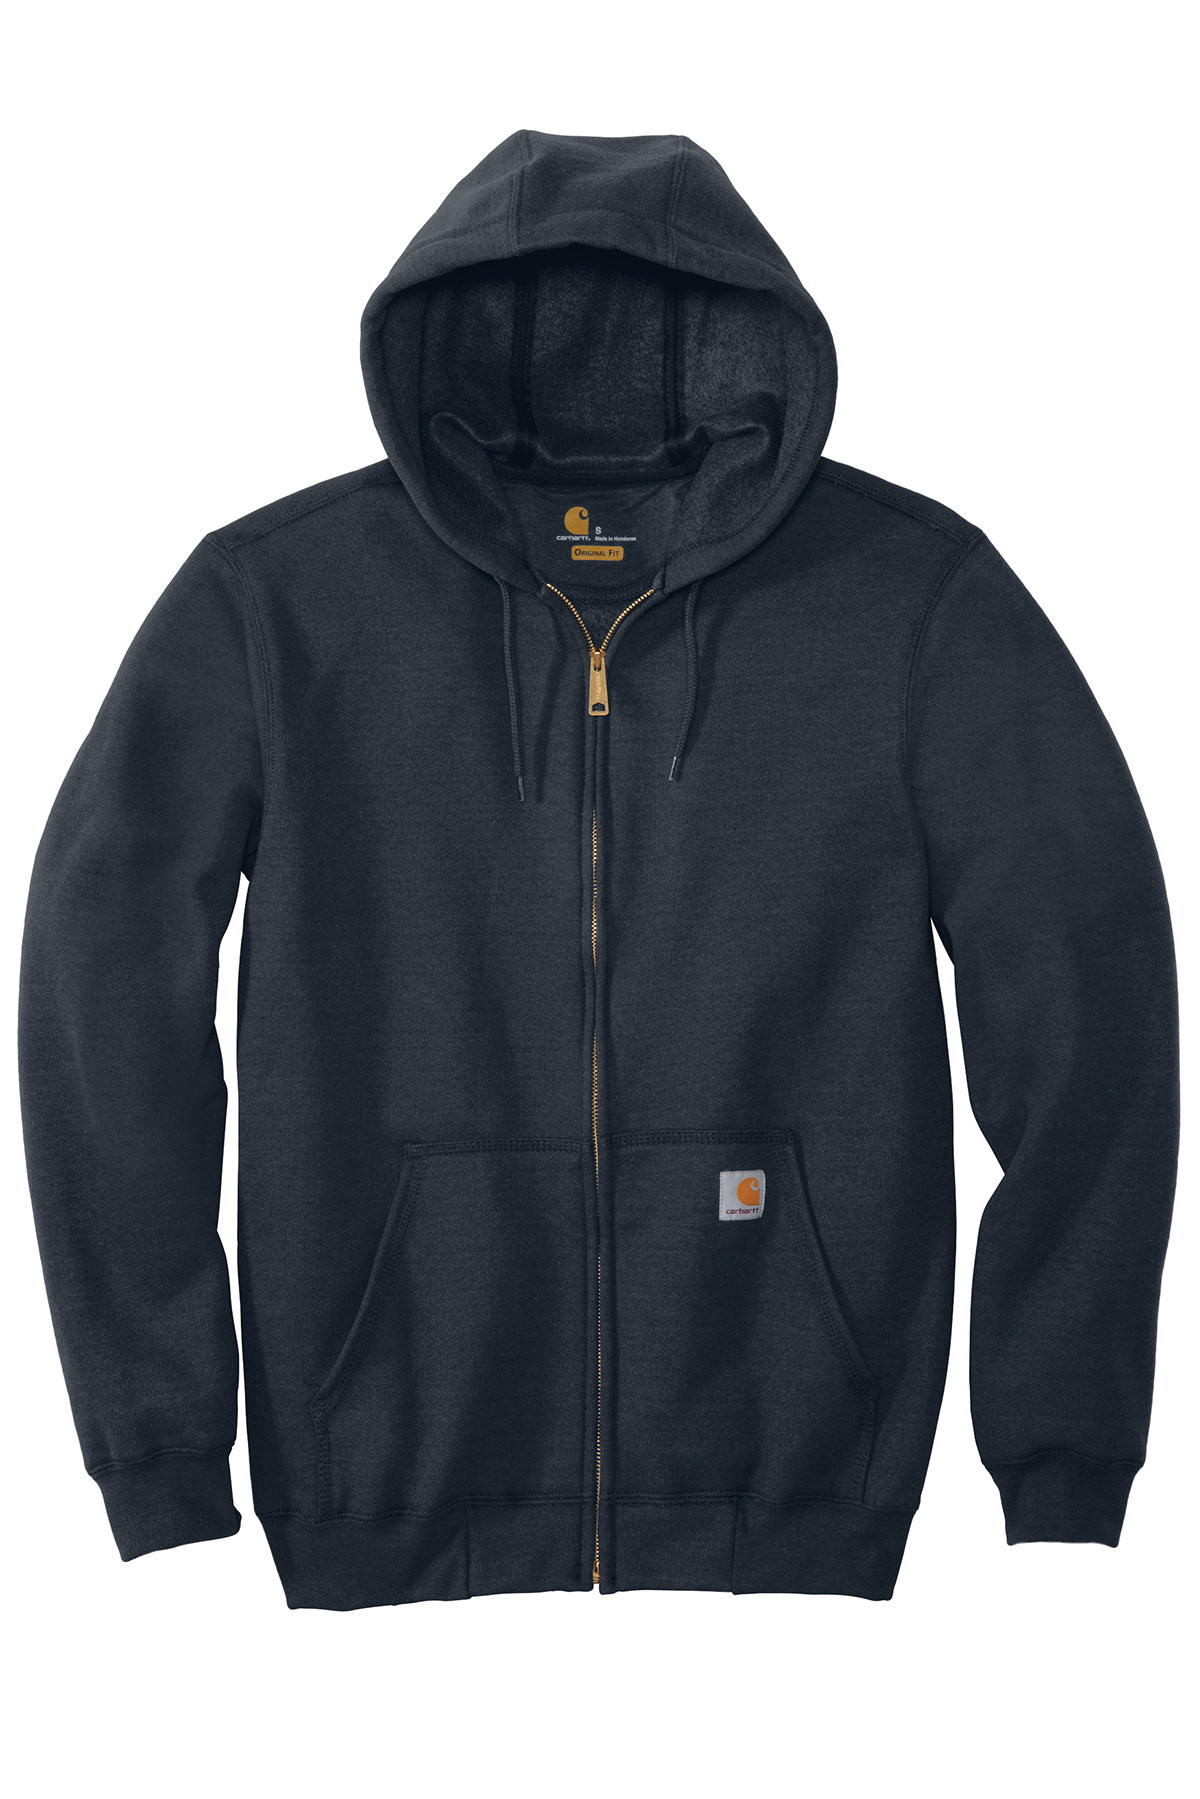 Carhartt Midweight Hooded Zip-Front Sweatshirt, Product